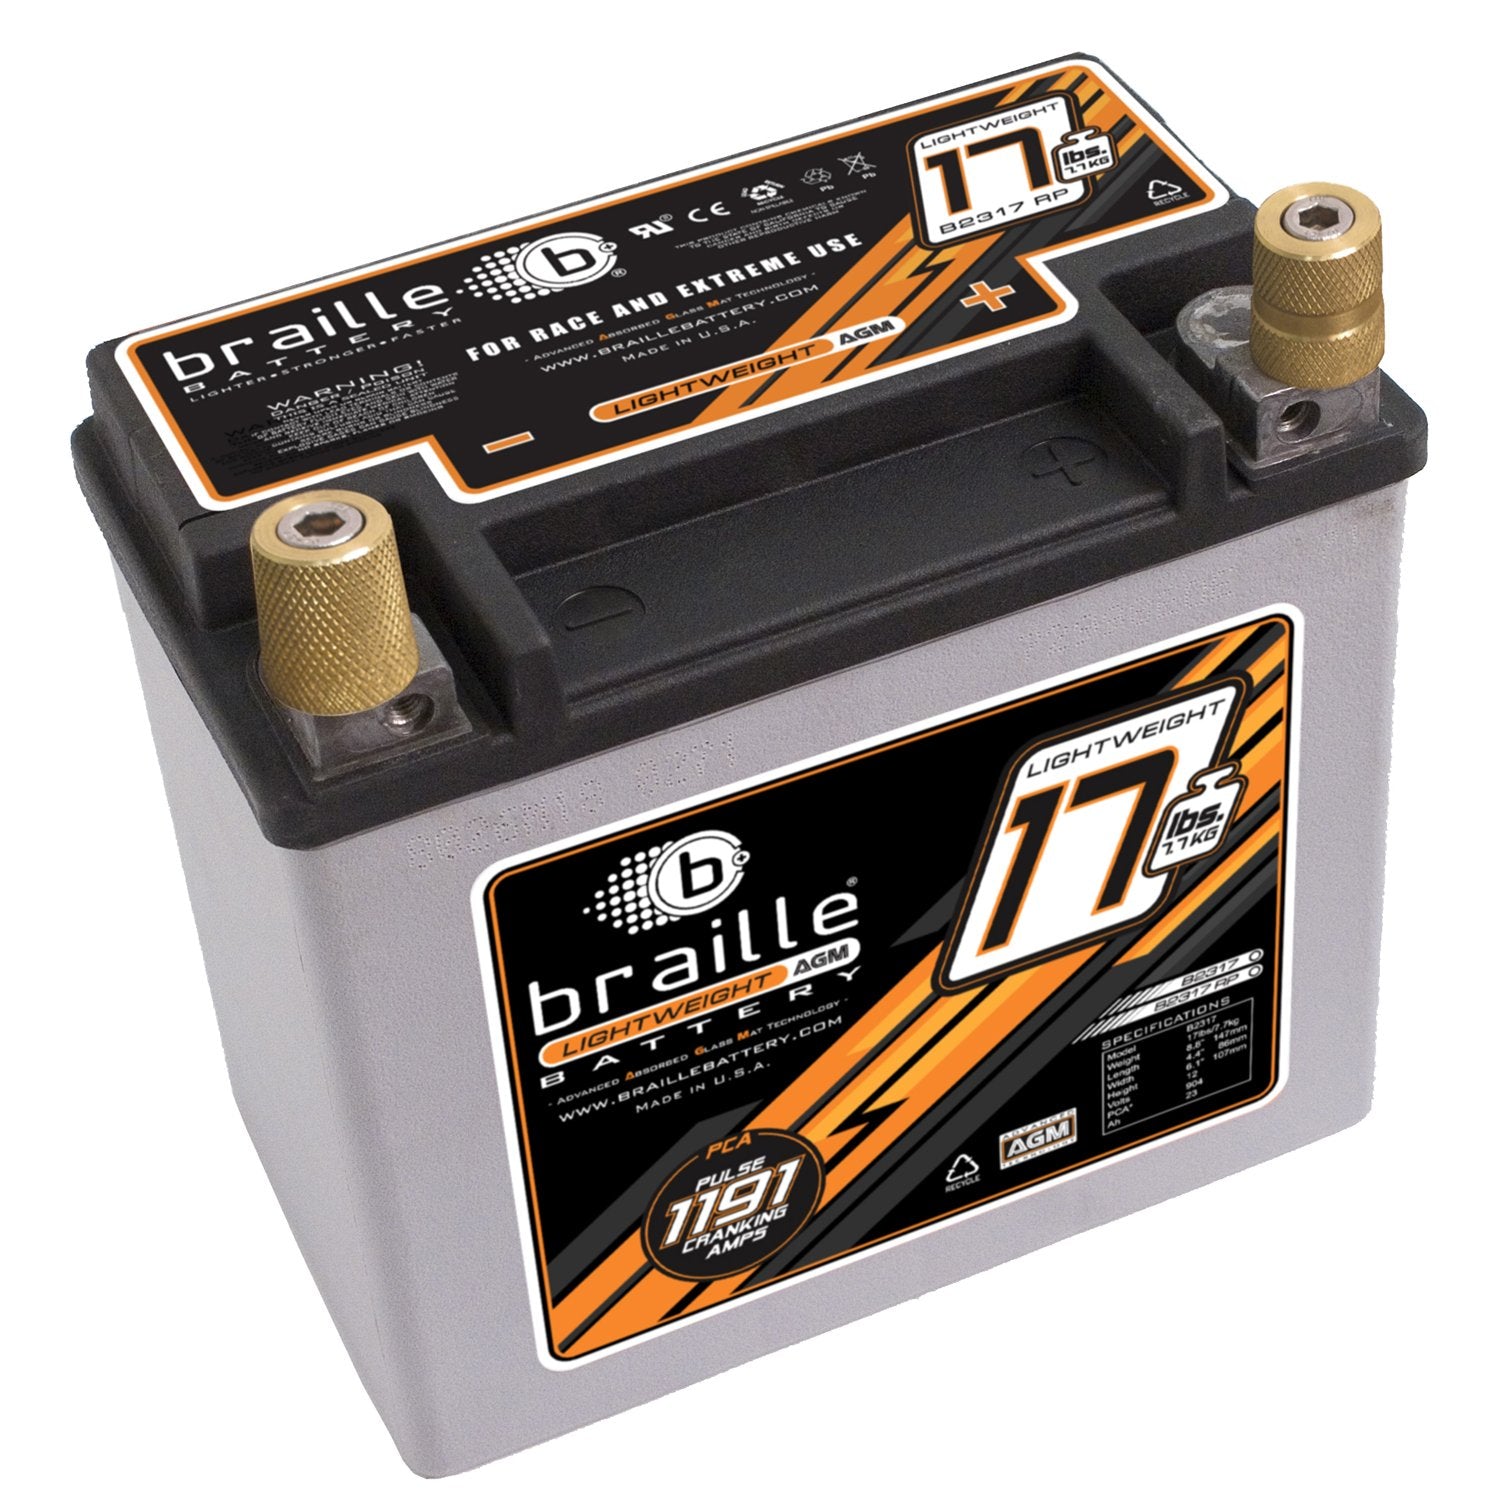 Braille Lightweight AGM battery - 17lbs RP